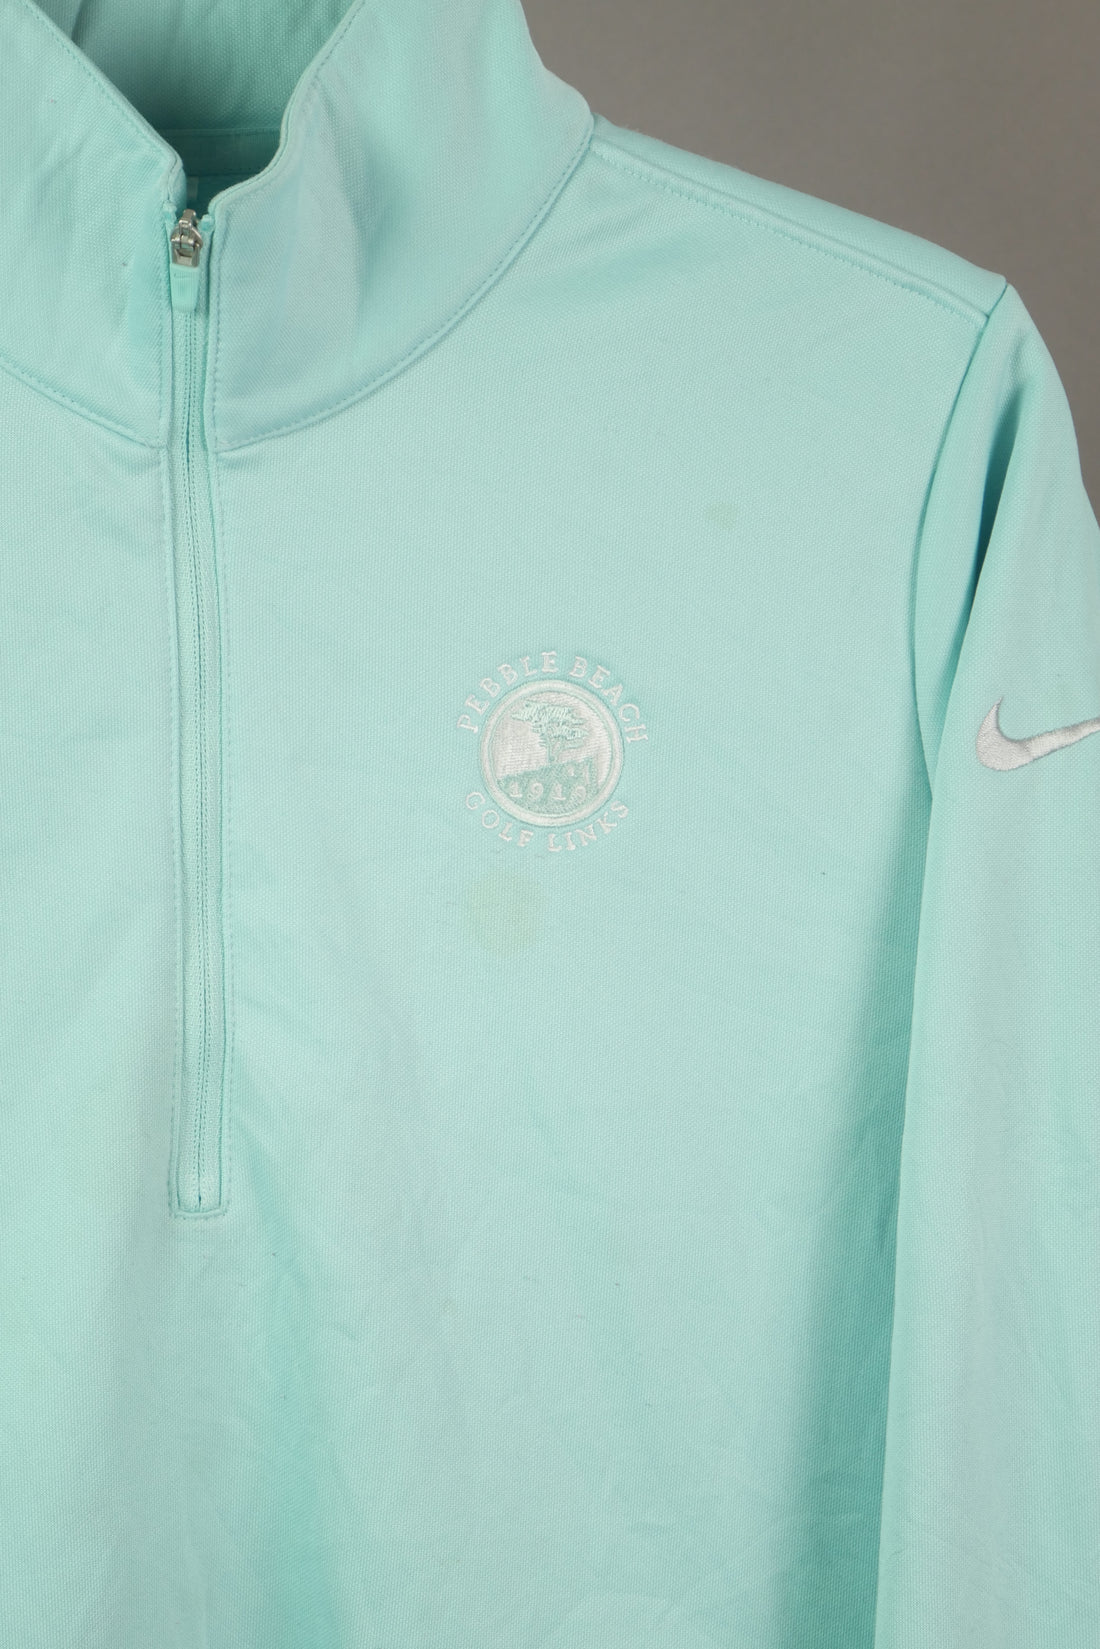 The Nike Pebble Beach Golf Links 1/4 Zip Sweatshirt (L)